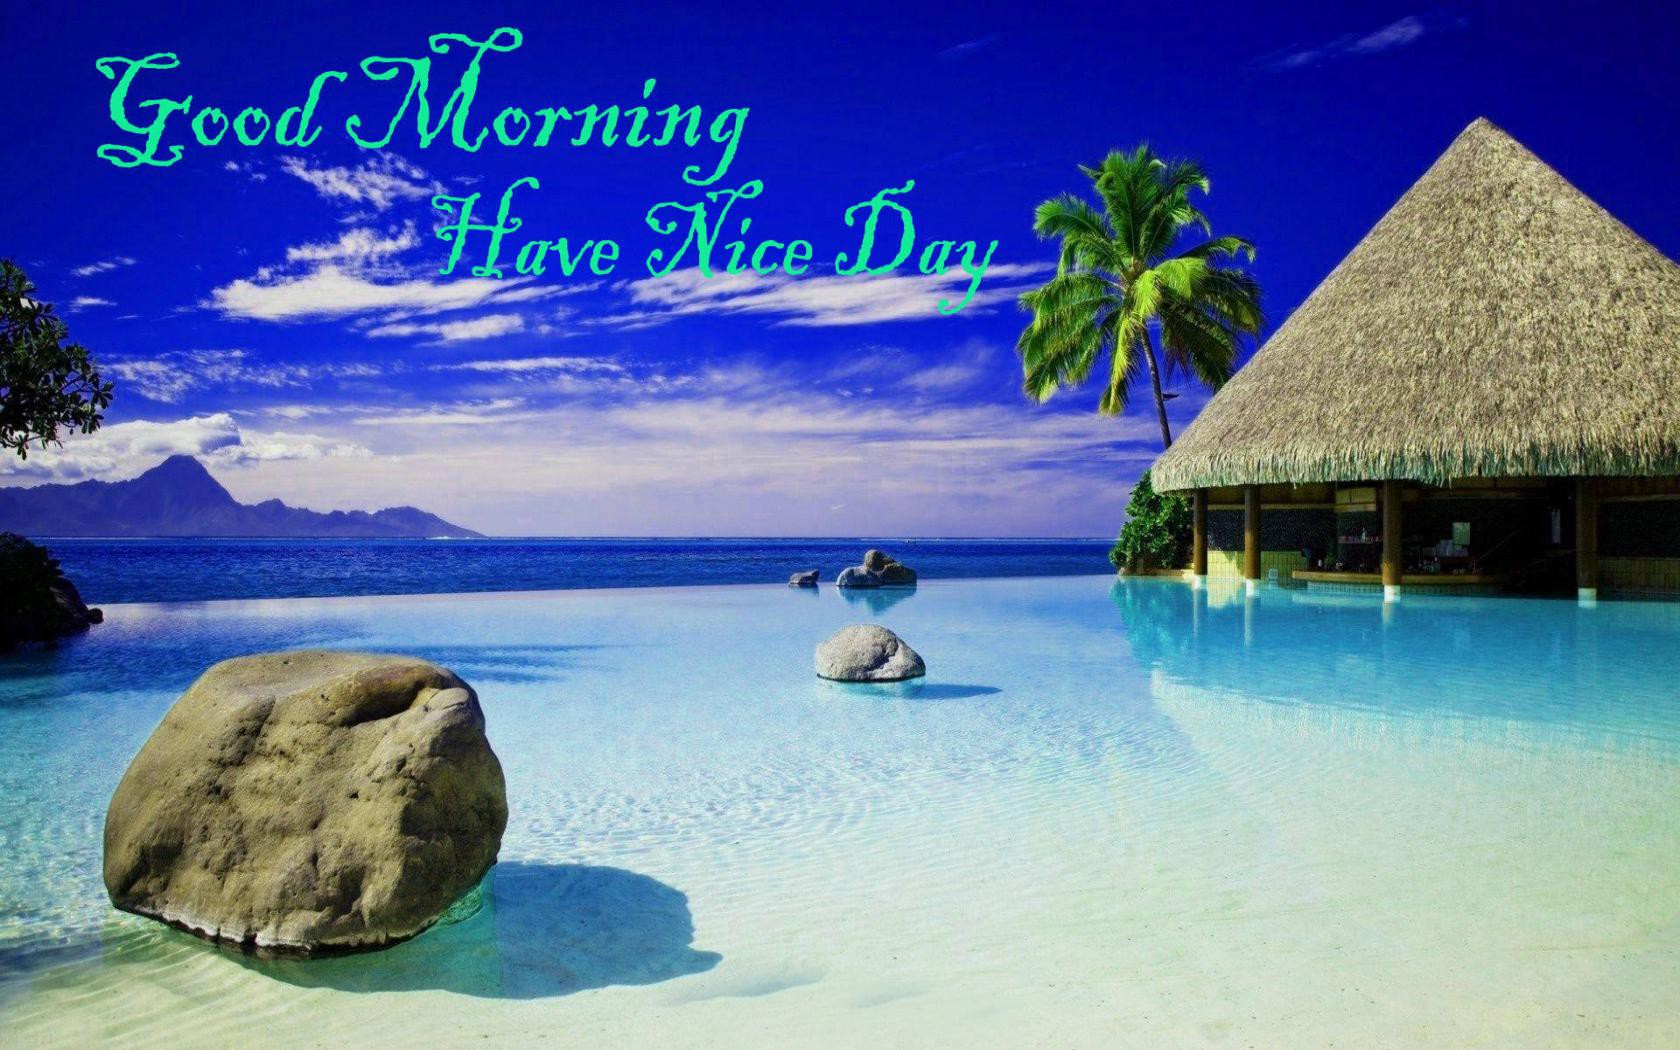 Beautiful Good Morning Sea Images